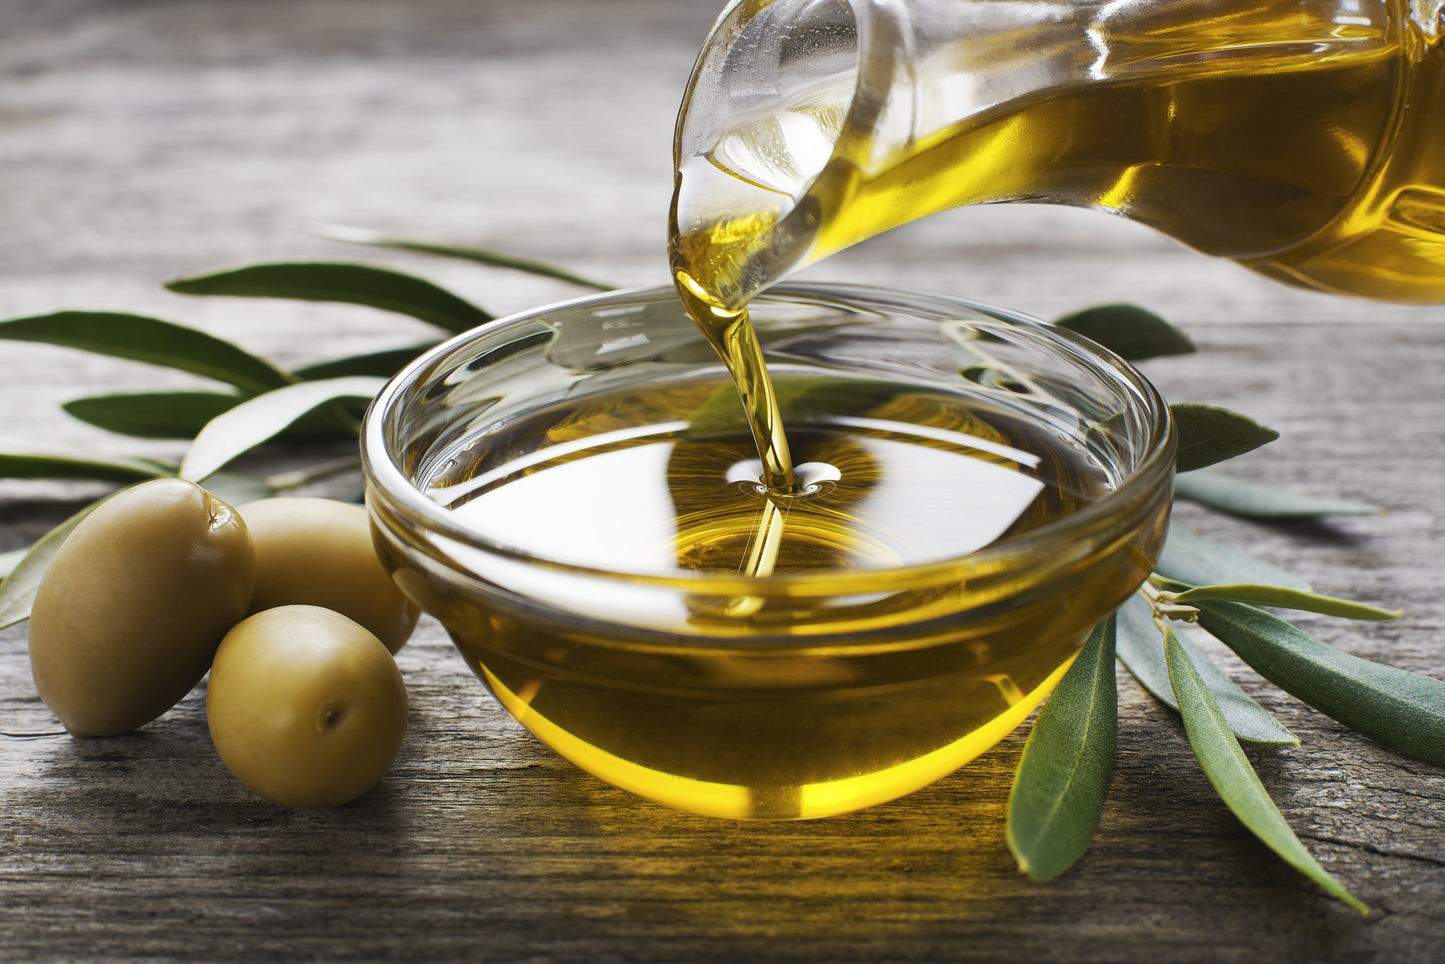 Energize Olive Oil Soap - Satsuma Citrus Blast